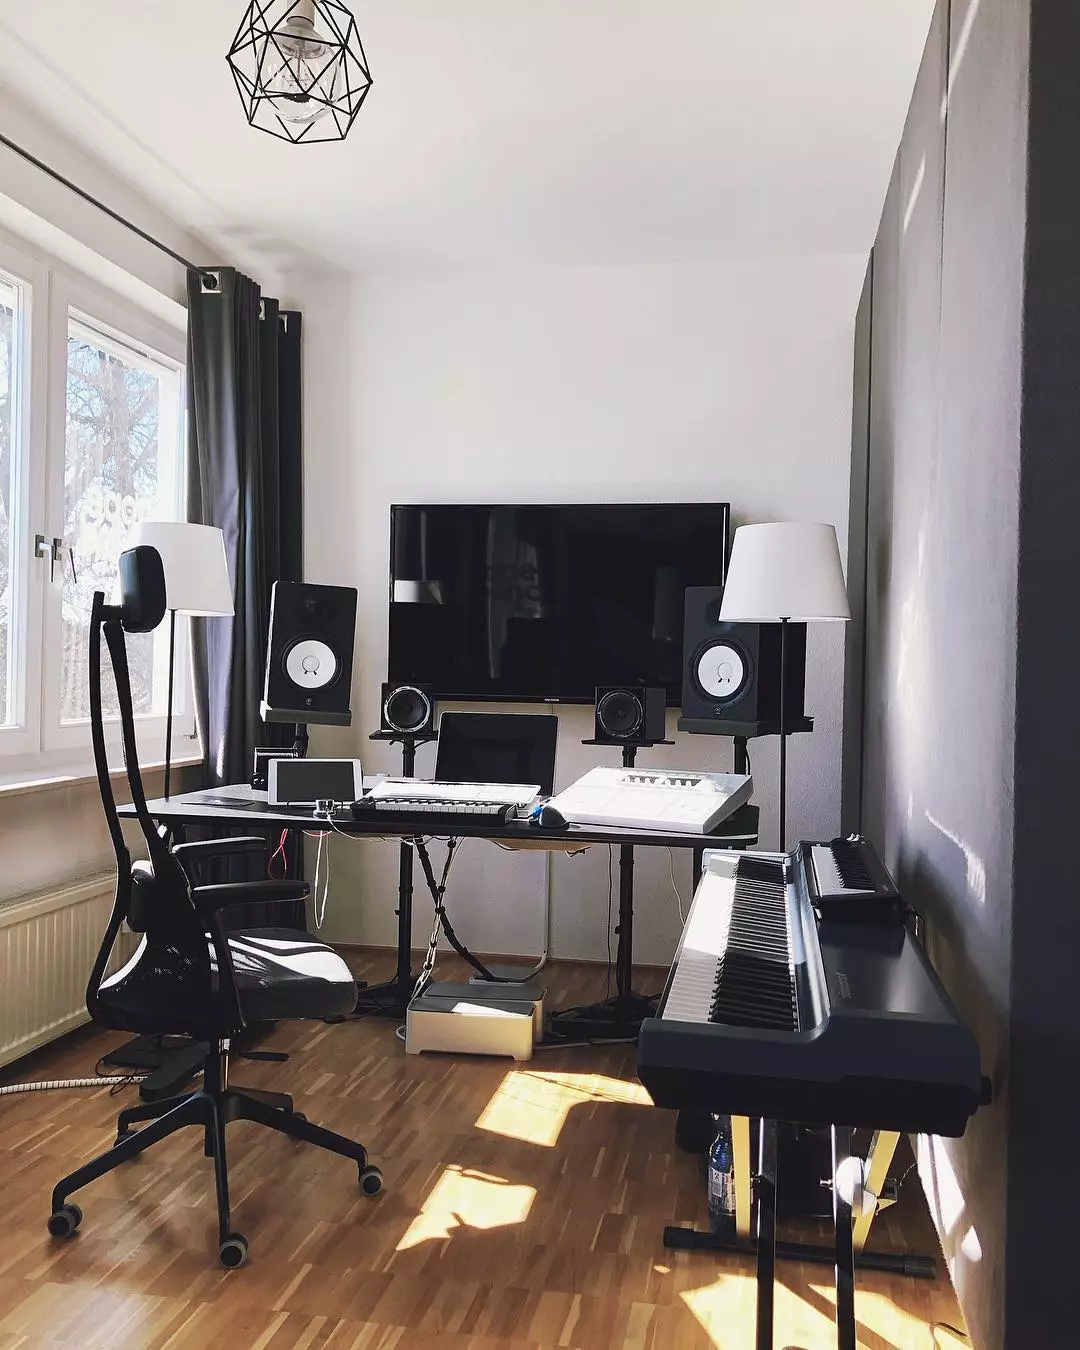 How to Transform a Spare Room into a Home Music Studio | Extra Space Storage